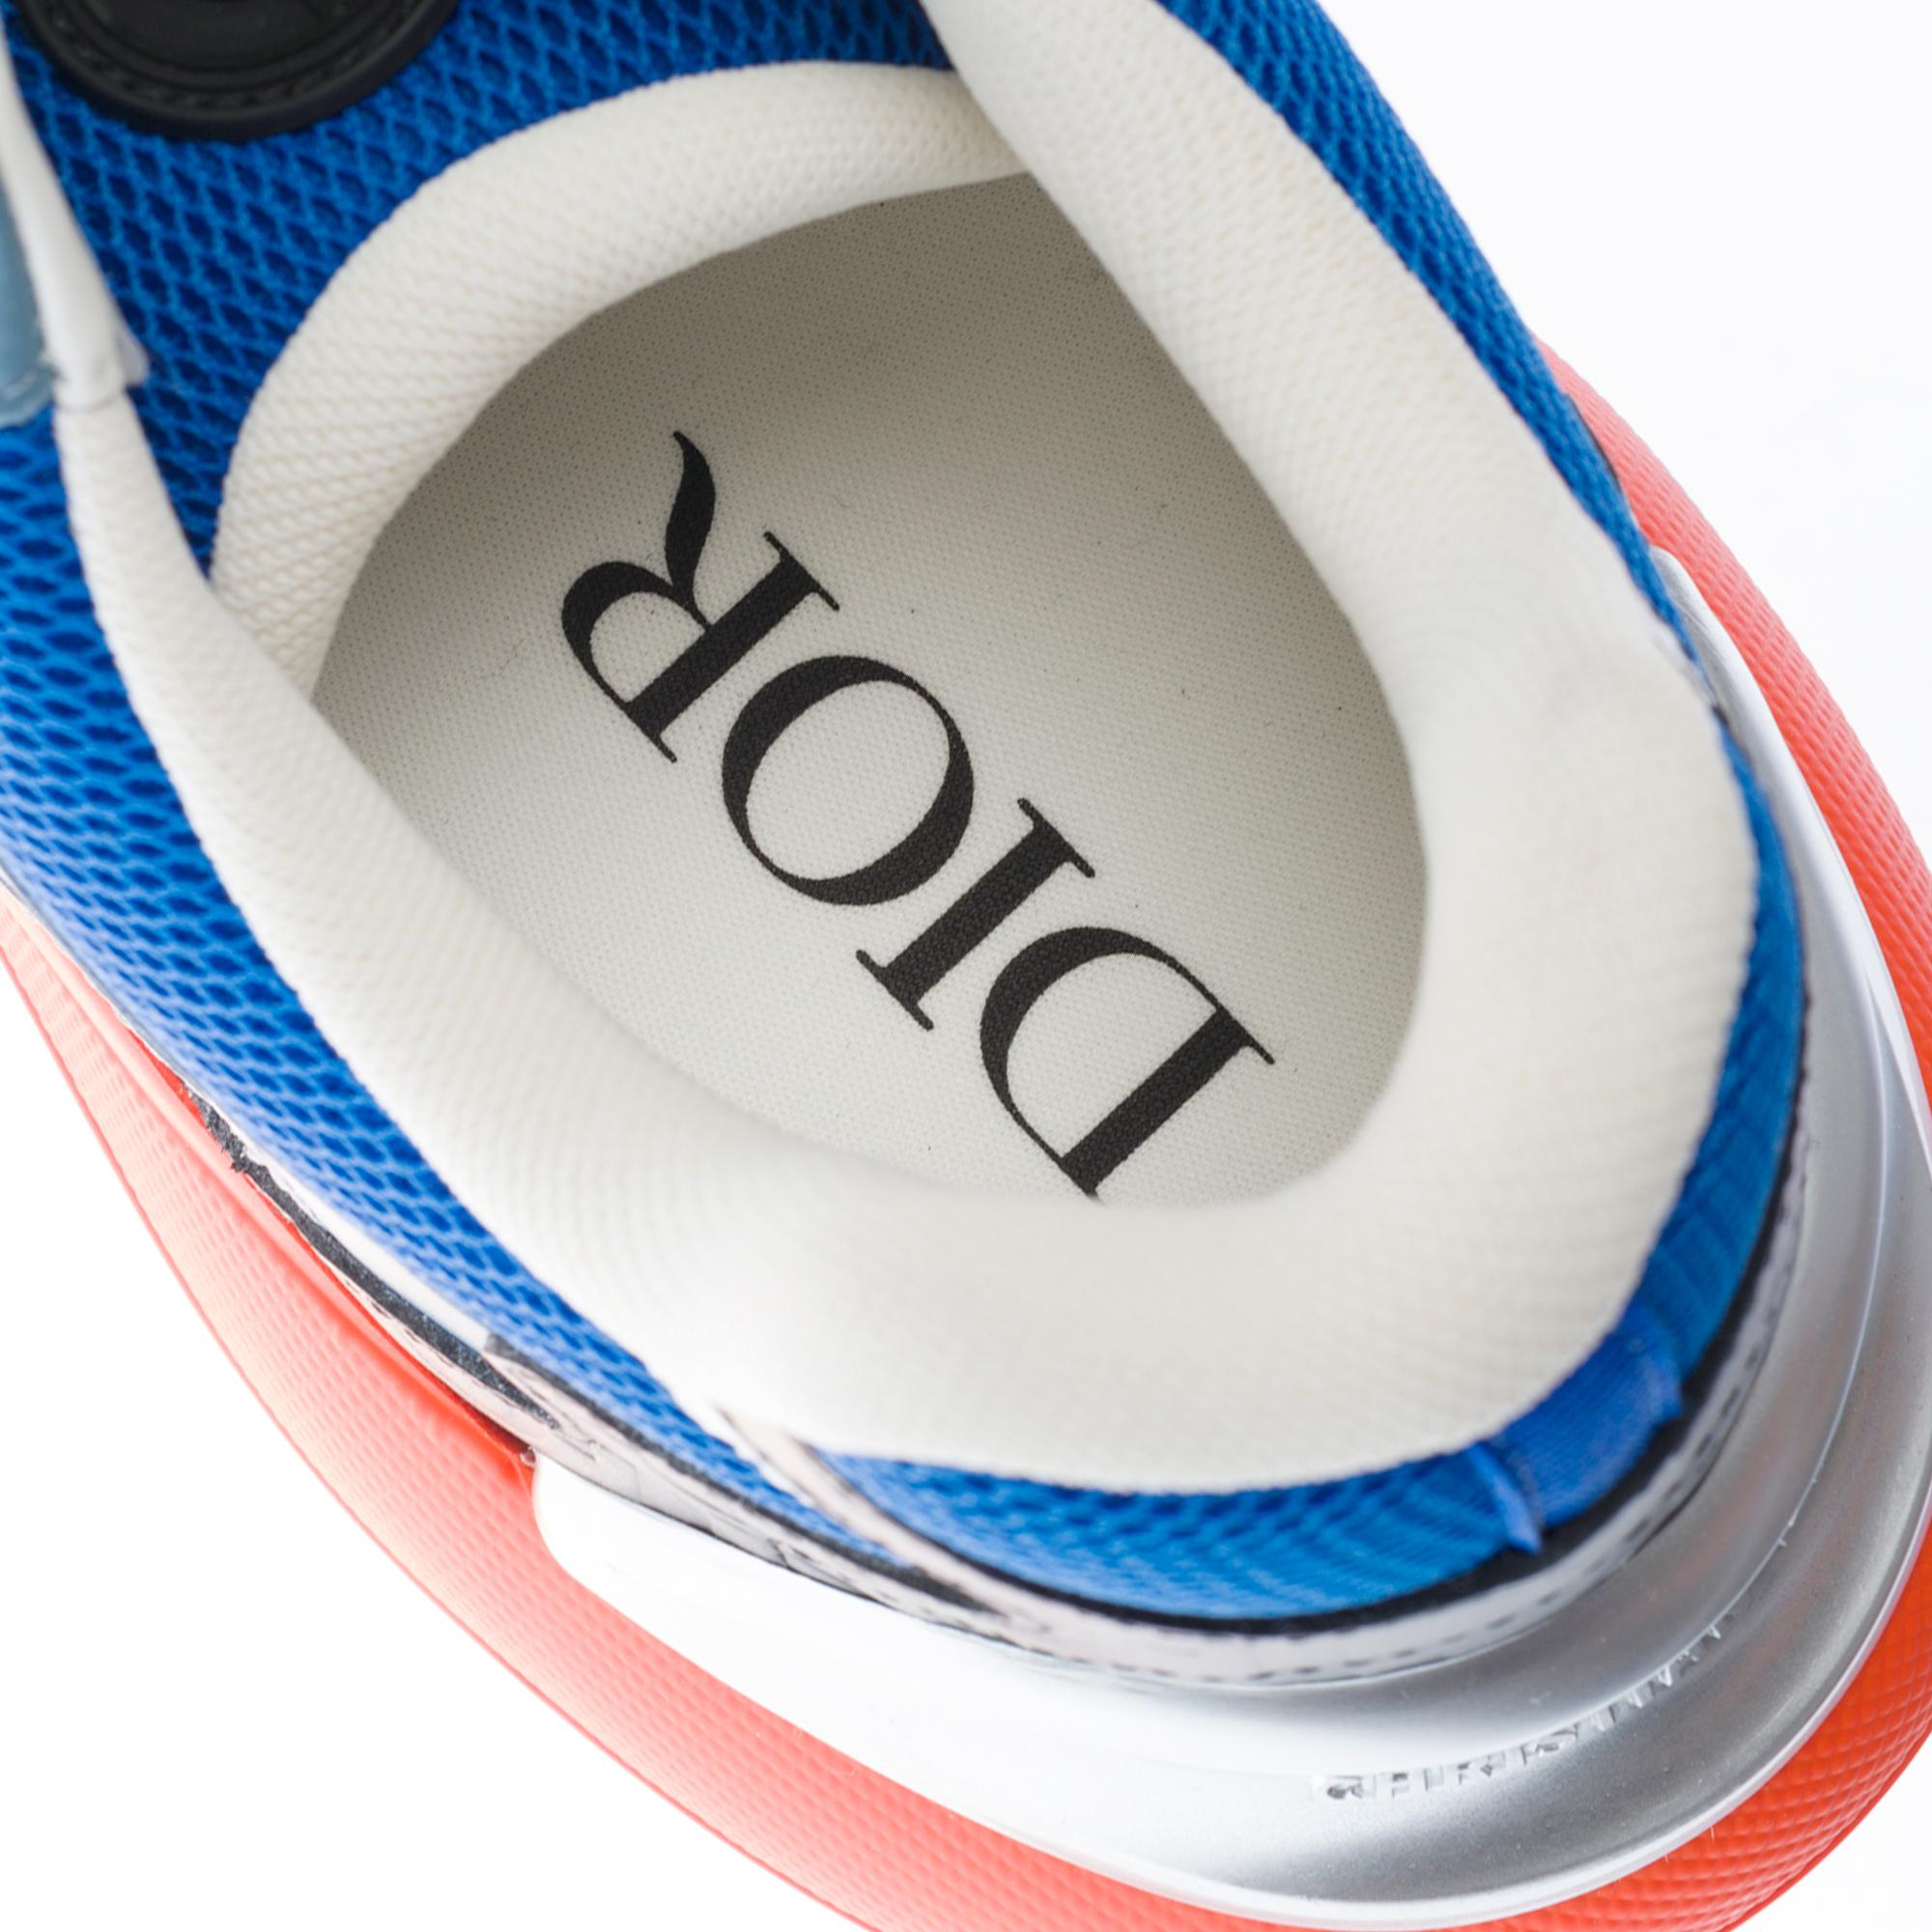 Men's New Sneakers Dior B24 Sorayama Kim Jones in blue, orange and green For Sale